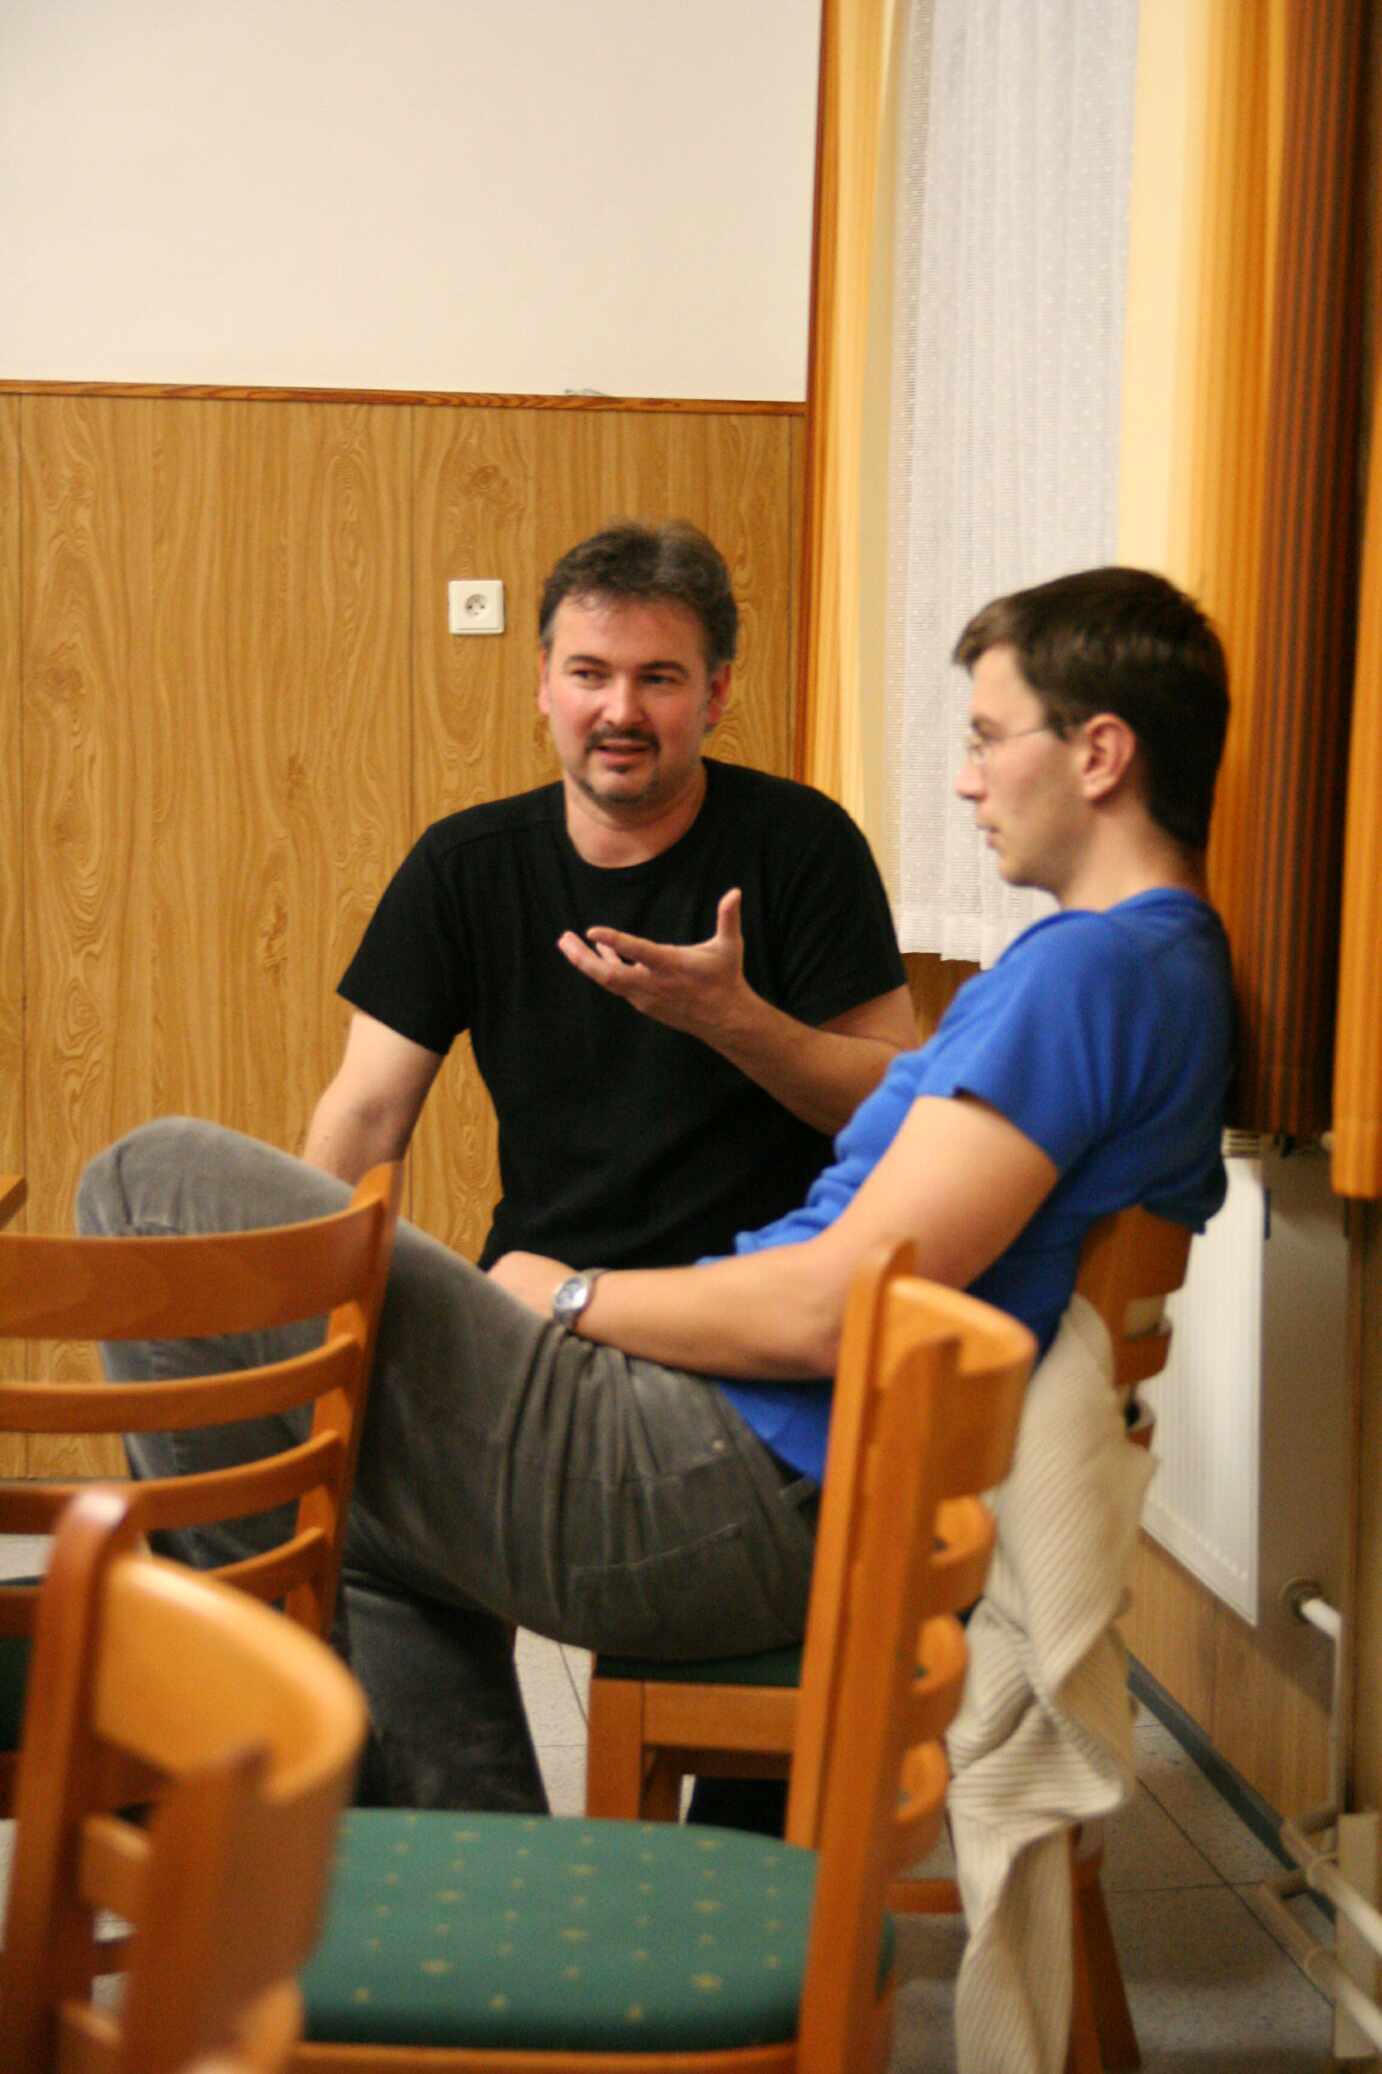 Petr Bureš discussing with Petr Šmarda